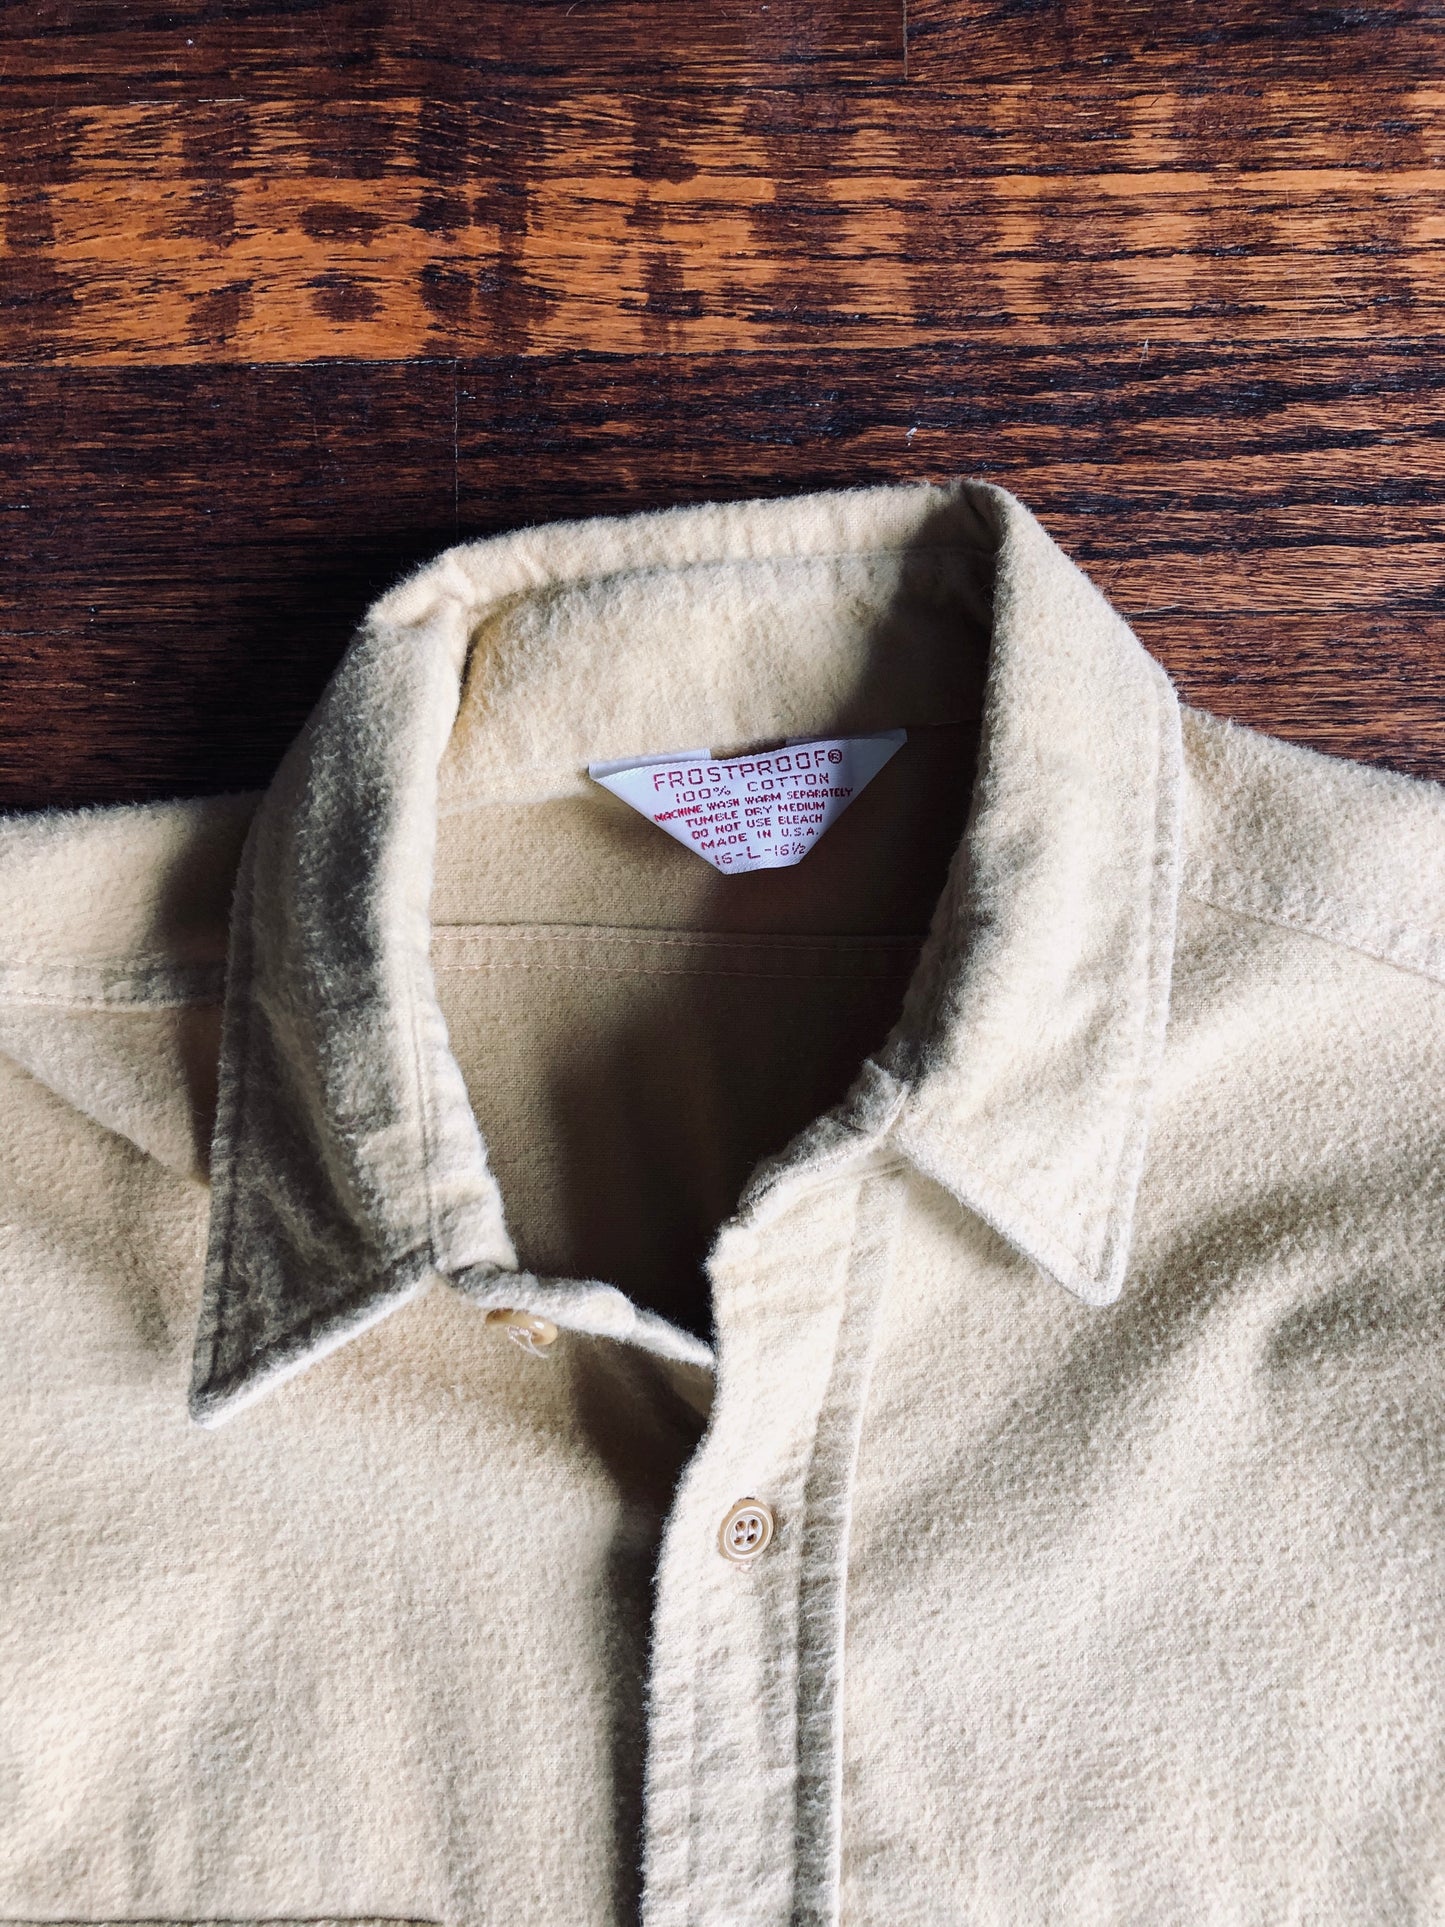 1960’s Cotton Chamois Shirt